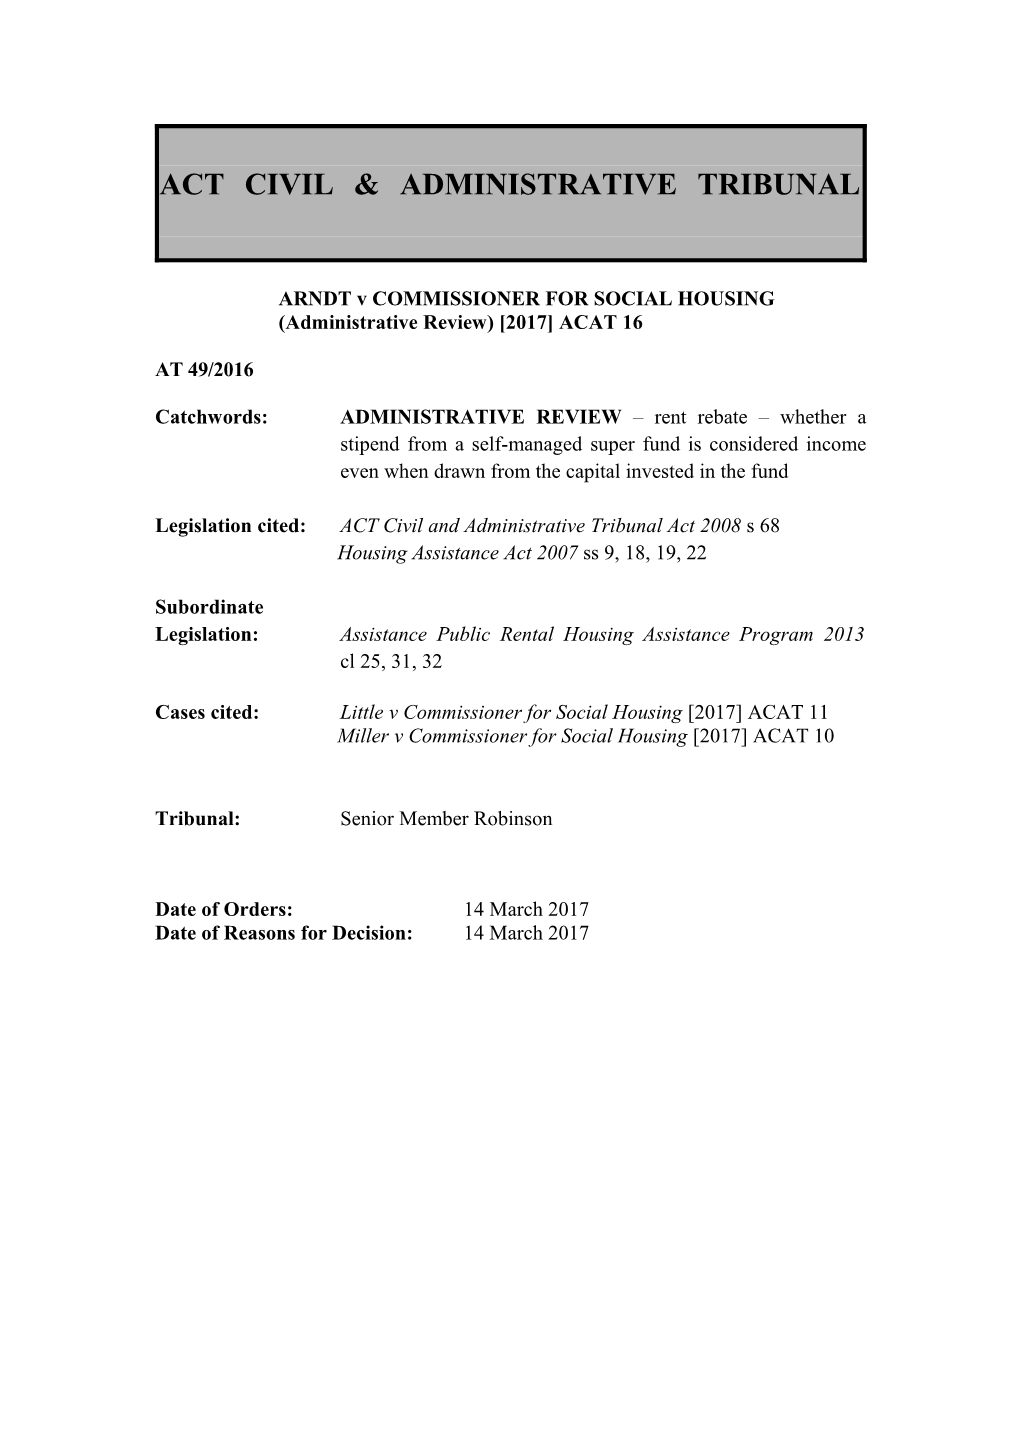 ARNDT V COMMISSIONER for SOCIAL HOUSING(Administrative Review) 2017 ACAT 16